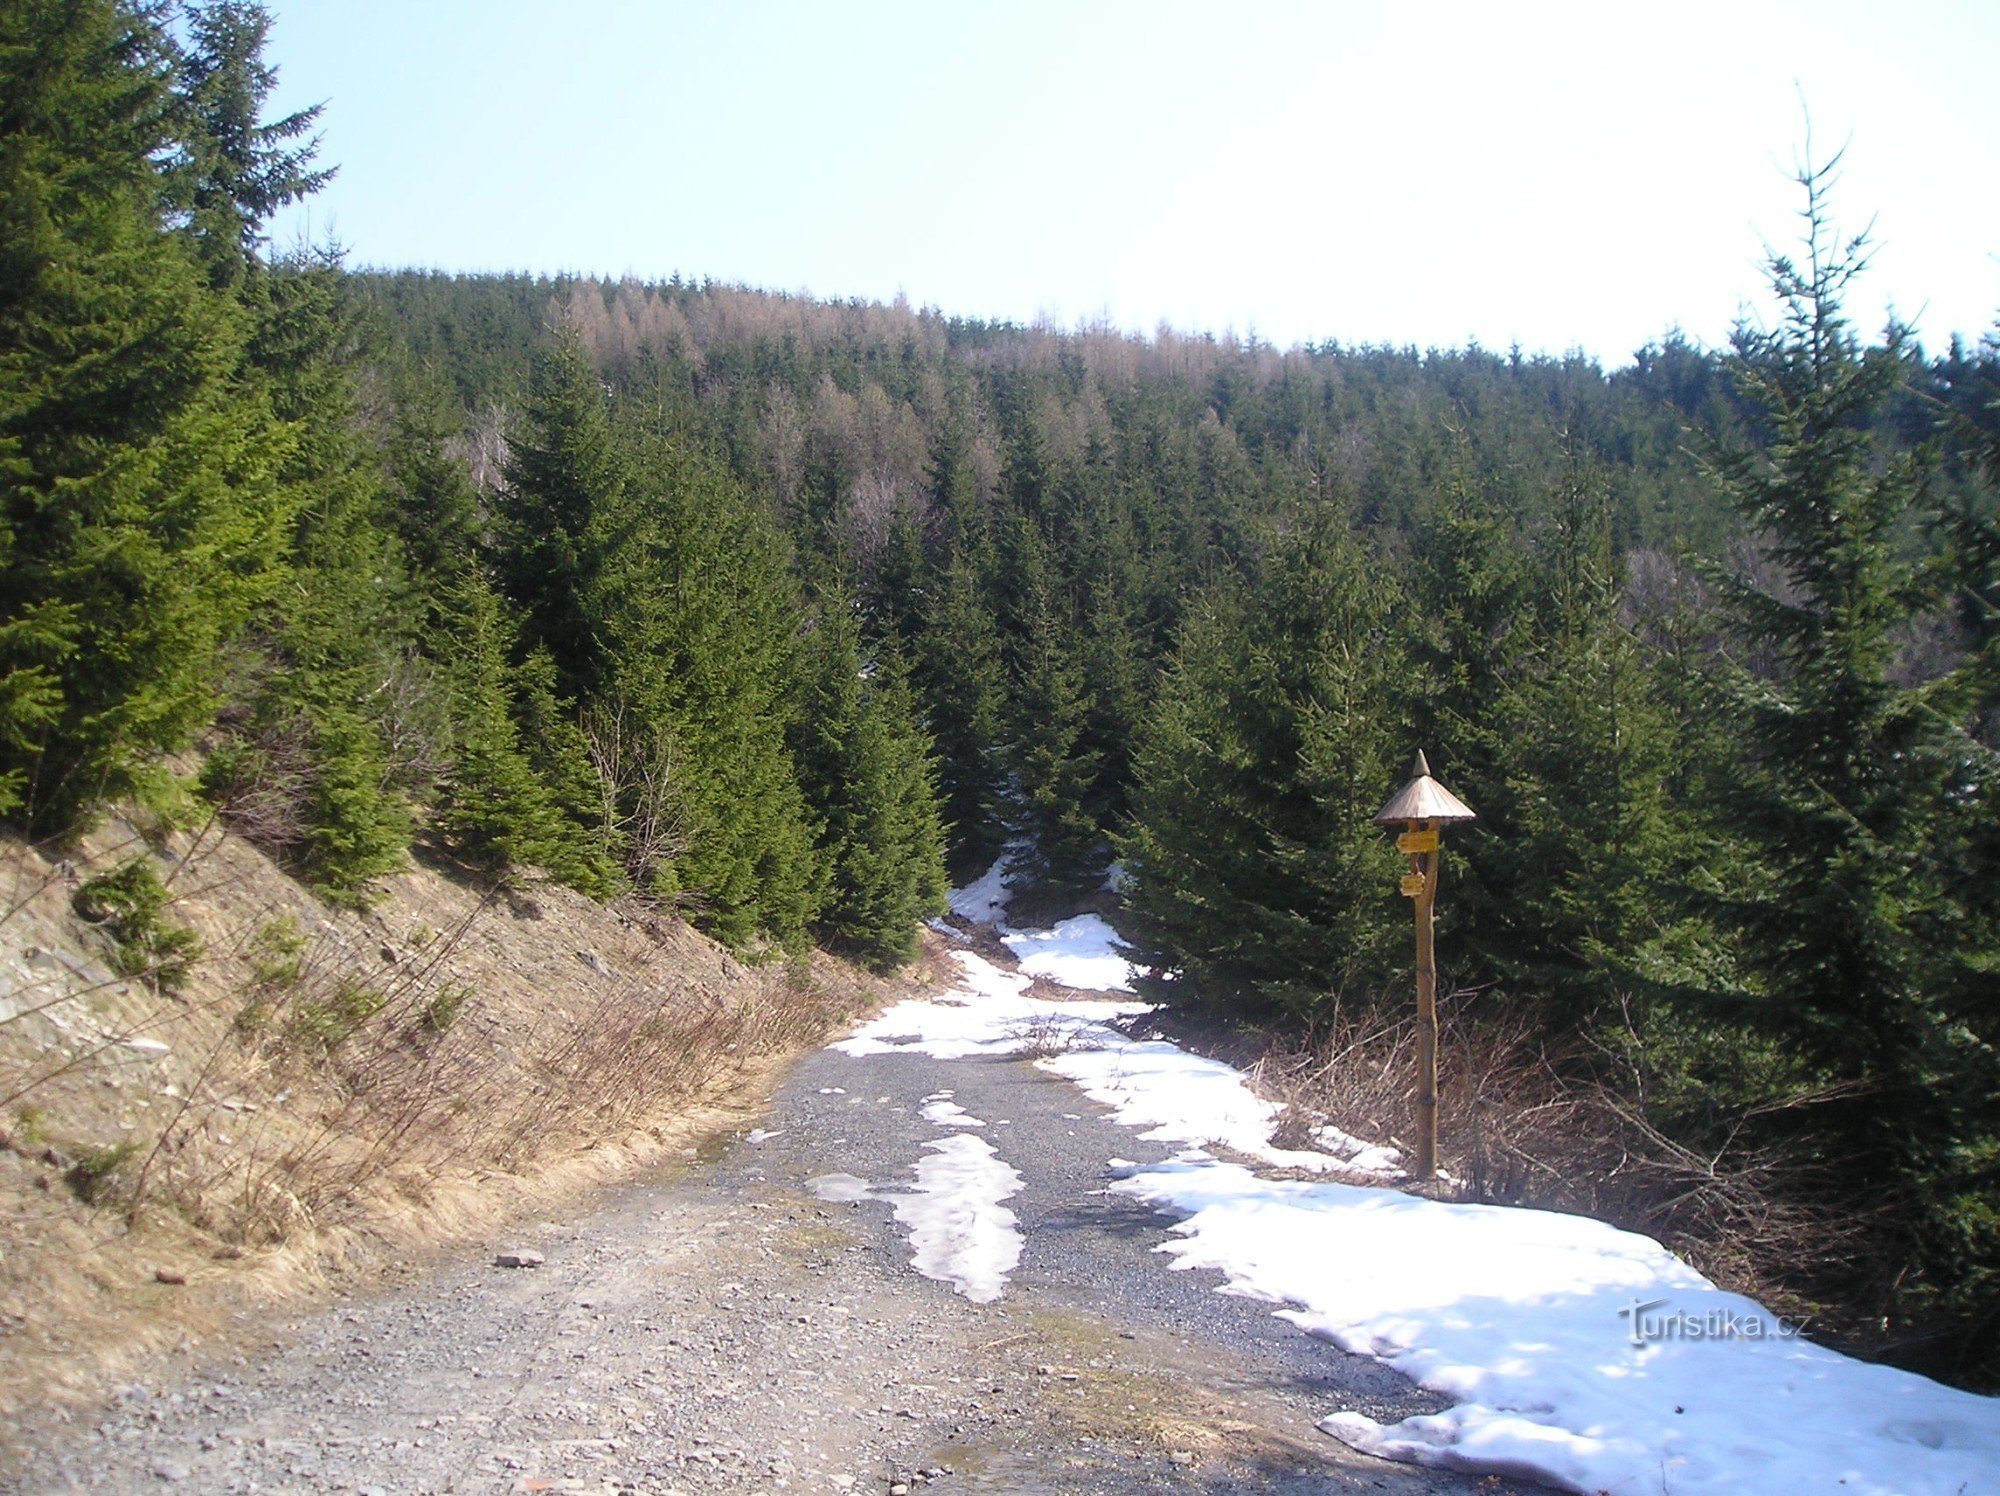 crossroads below the summit